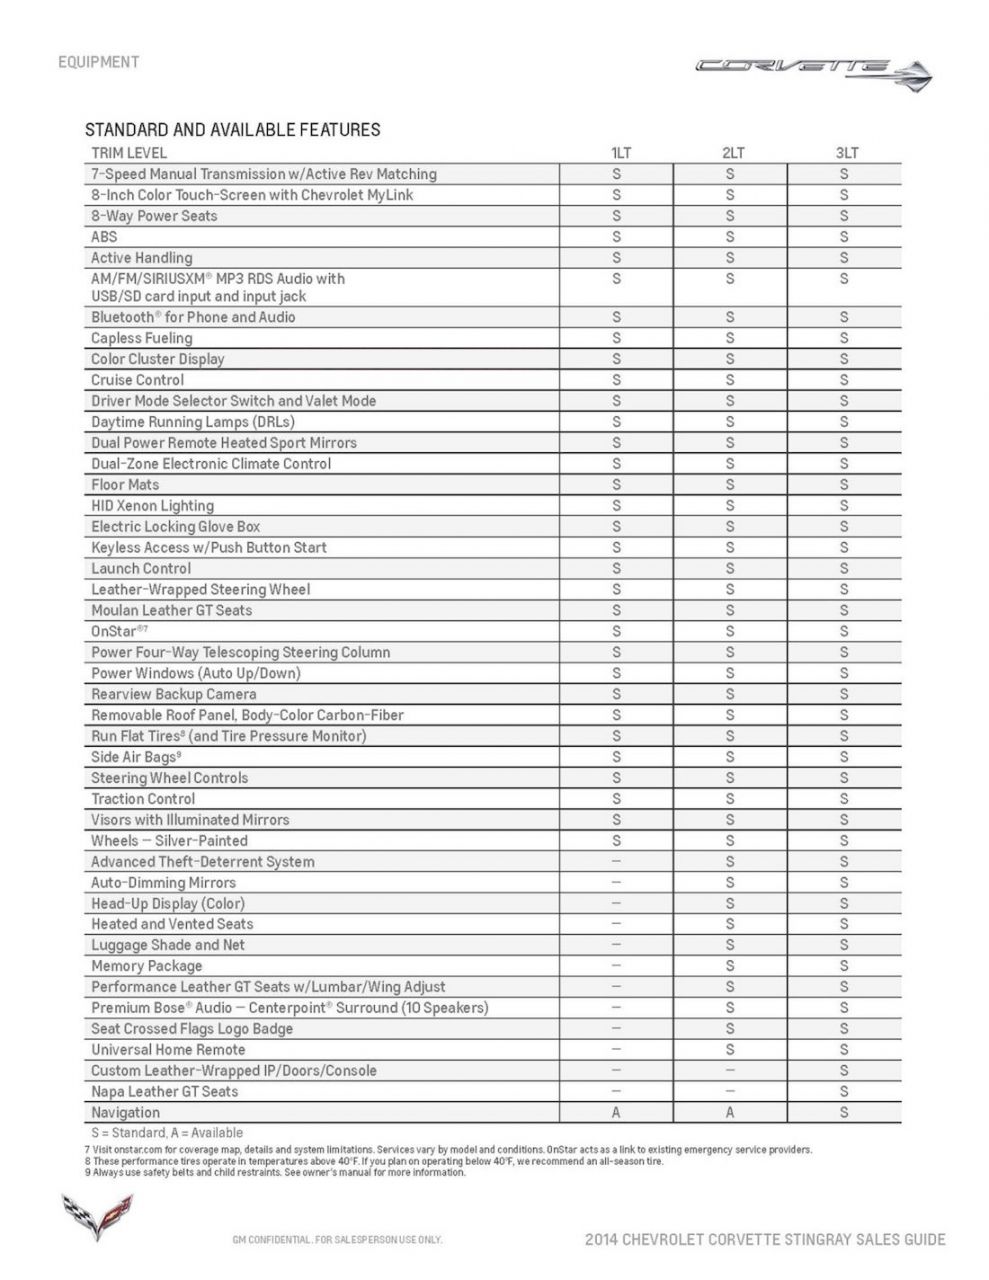 2014 C7 Corvette Stingray Sales Guide - Page9